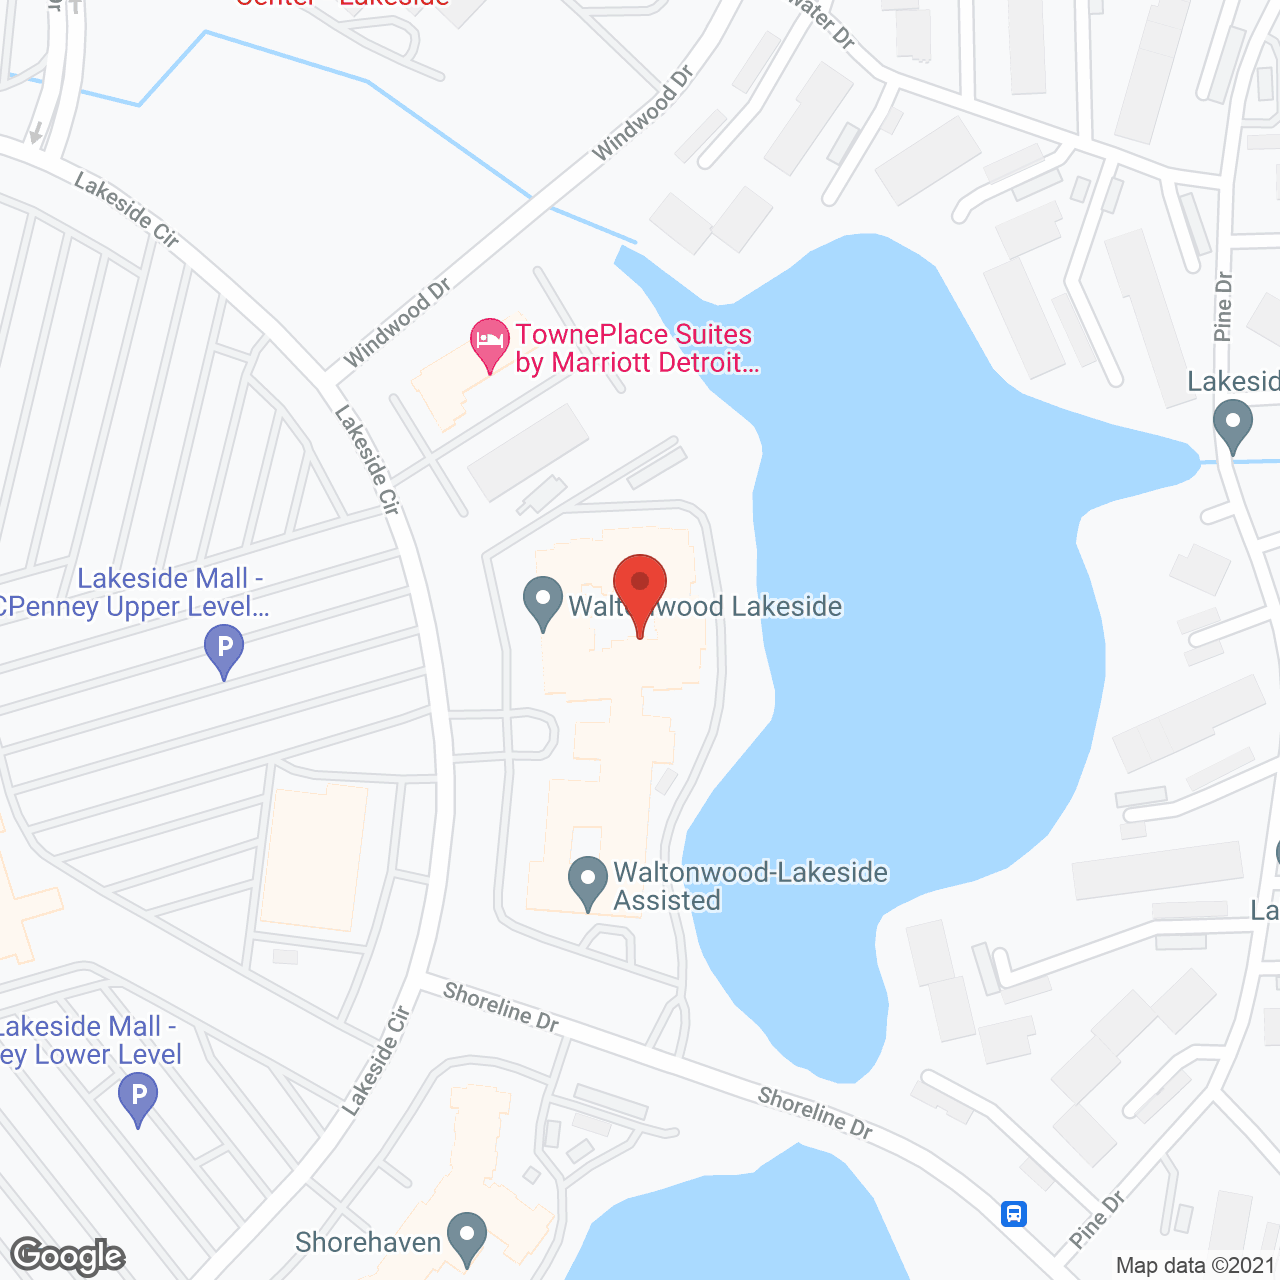 Waltonwood Lakeside in google map